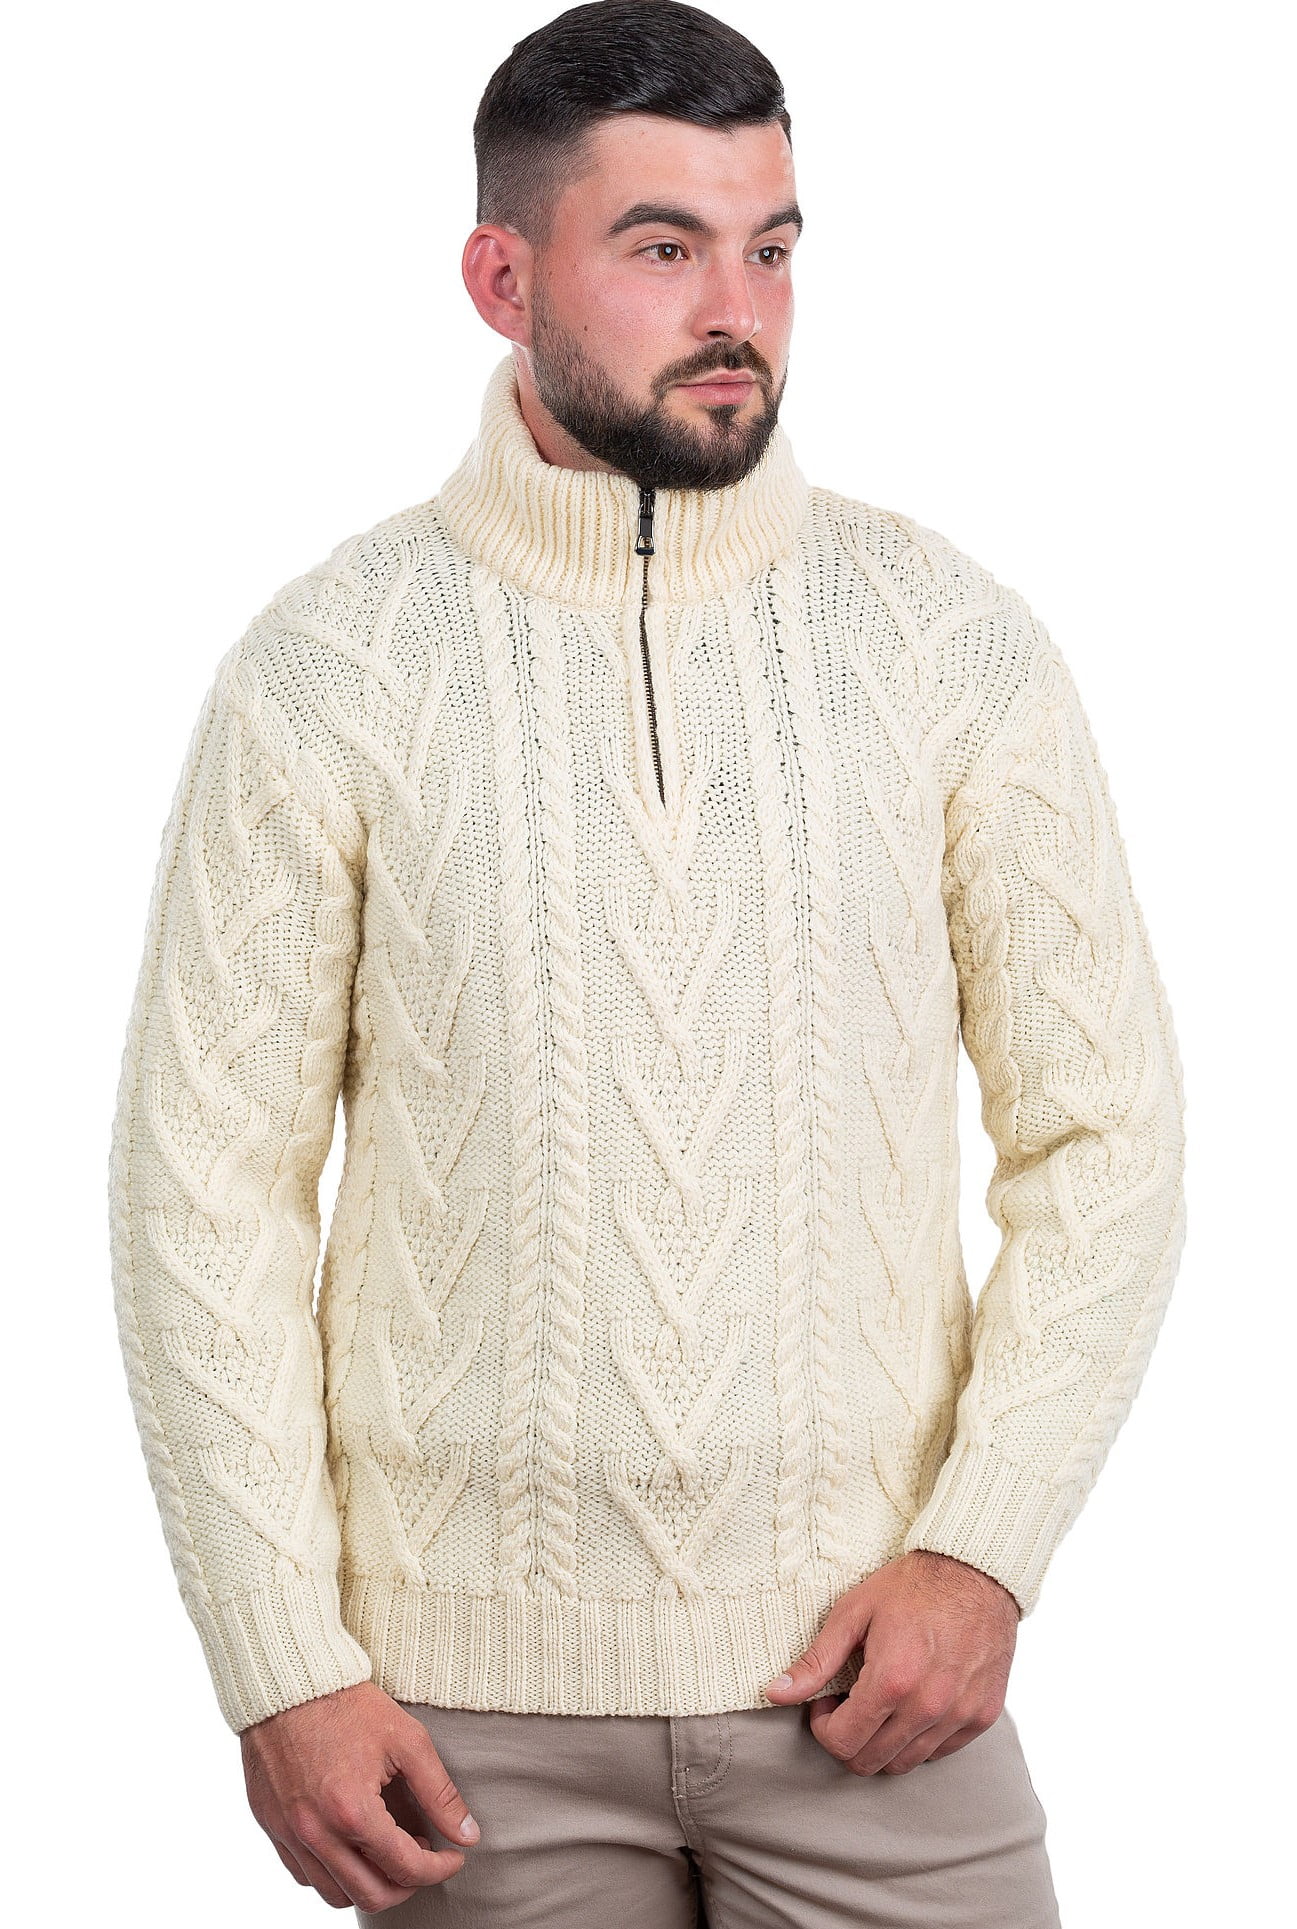 Kleding Herenkleding Sweaters Pullovers Men's Zip Neck Aran Fisherman Cable Knit Winter Outdoor Ireland Sweater — 100% Premium Merino Wool Jumper — Soft & Warm Knitted Pullover 